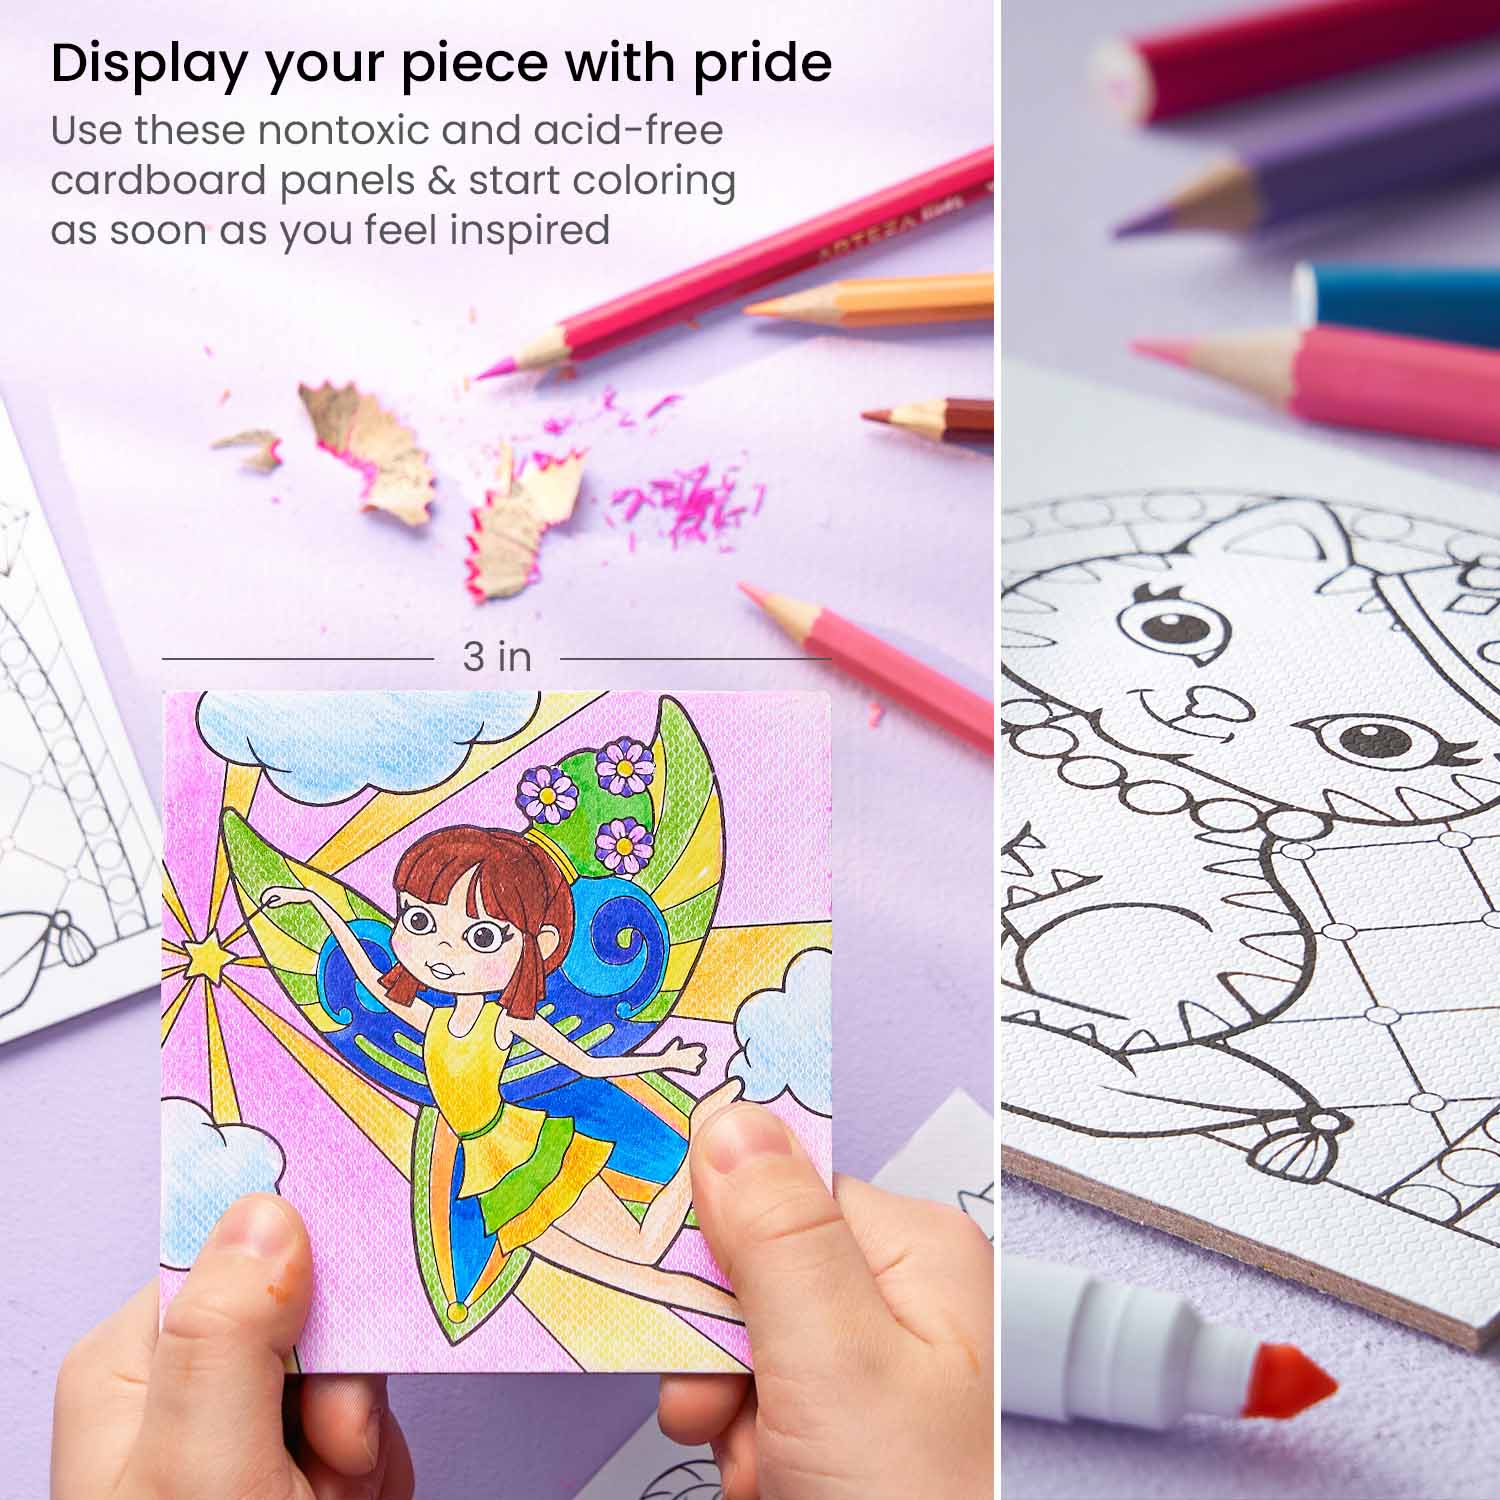 Arteza Kids Painting & Drawing Kit 75-Piece Artist Bundle 18 Mini Colored Pencils 16 Watercolor Cakes 14 Oil Pastels & 14 Crayons Art Supplie